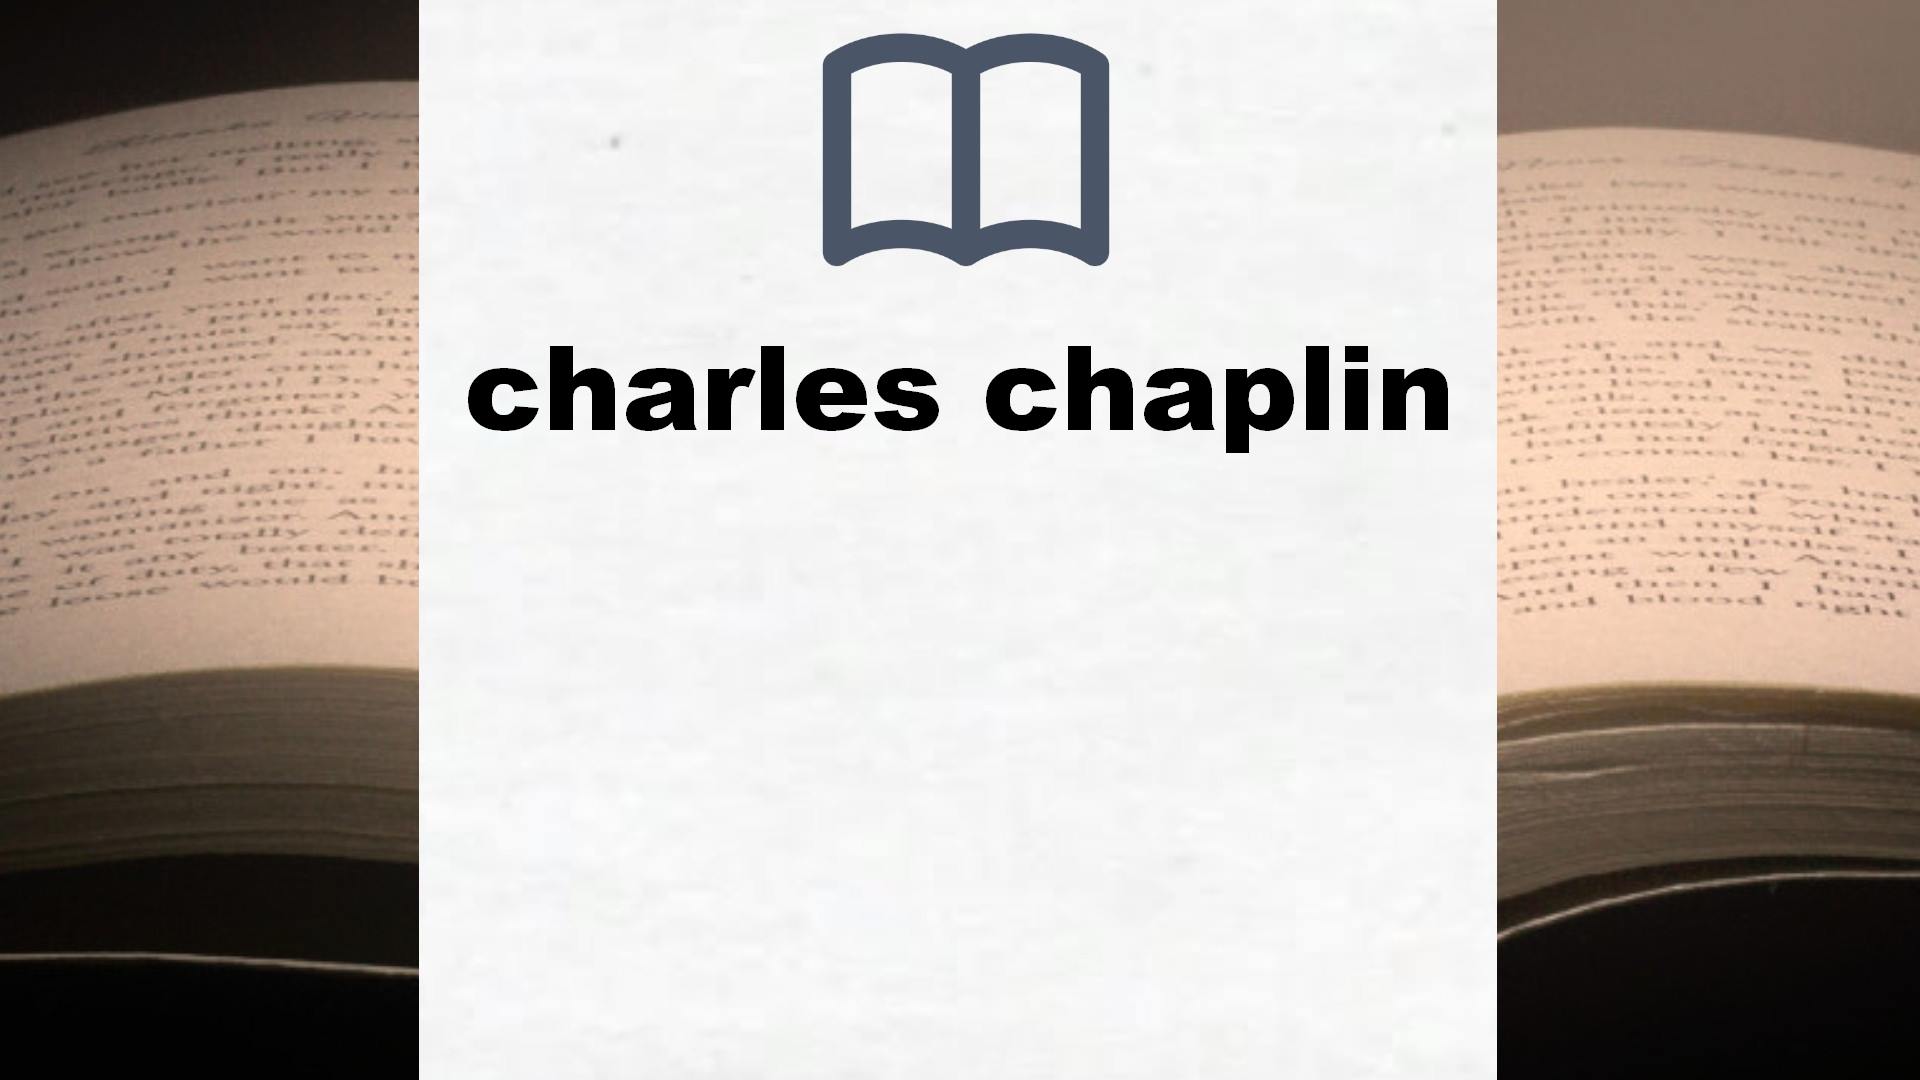 Libros sobre charles chaplin